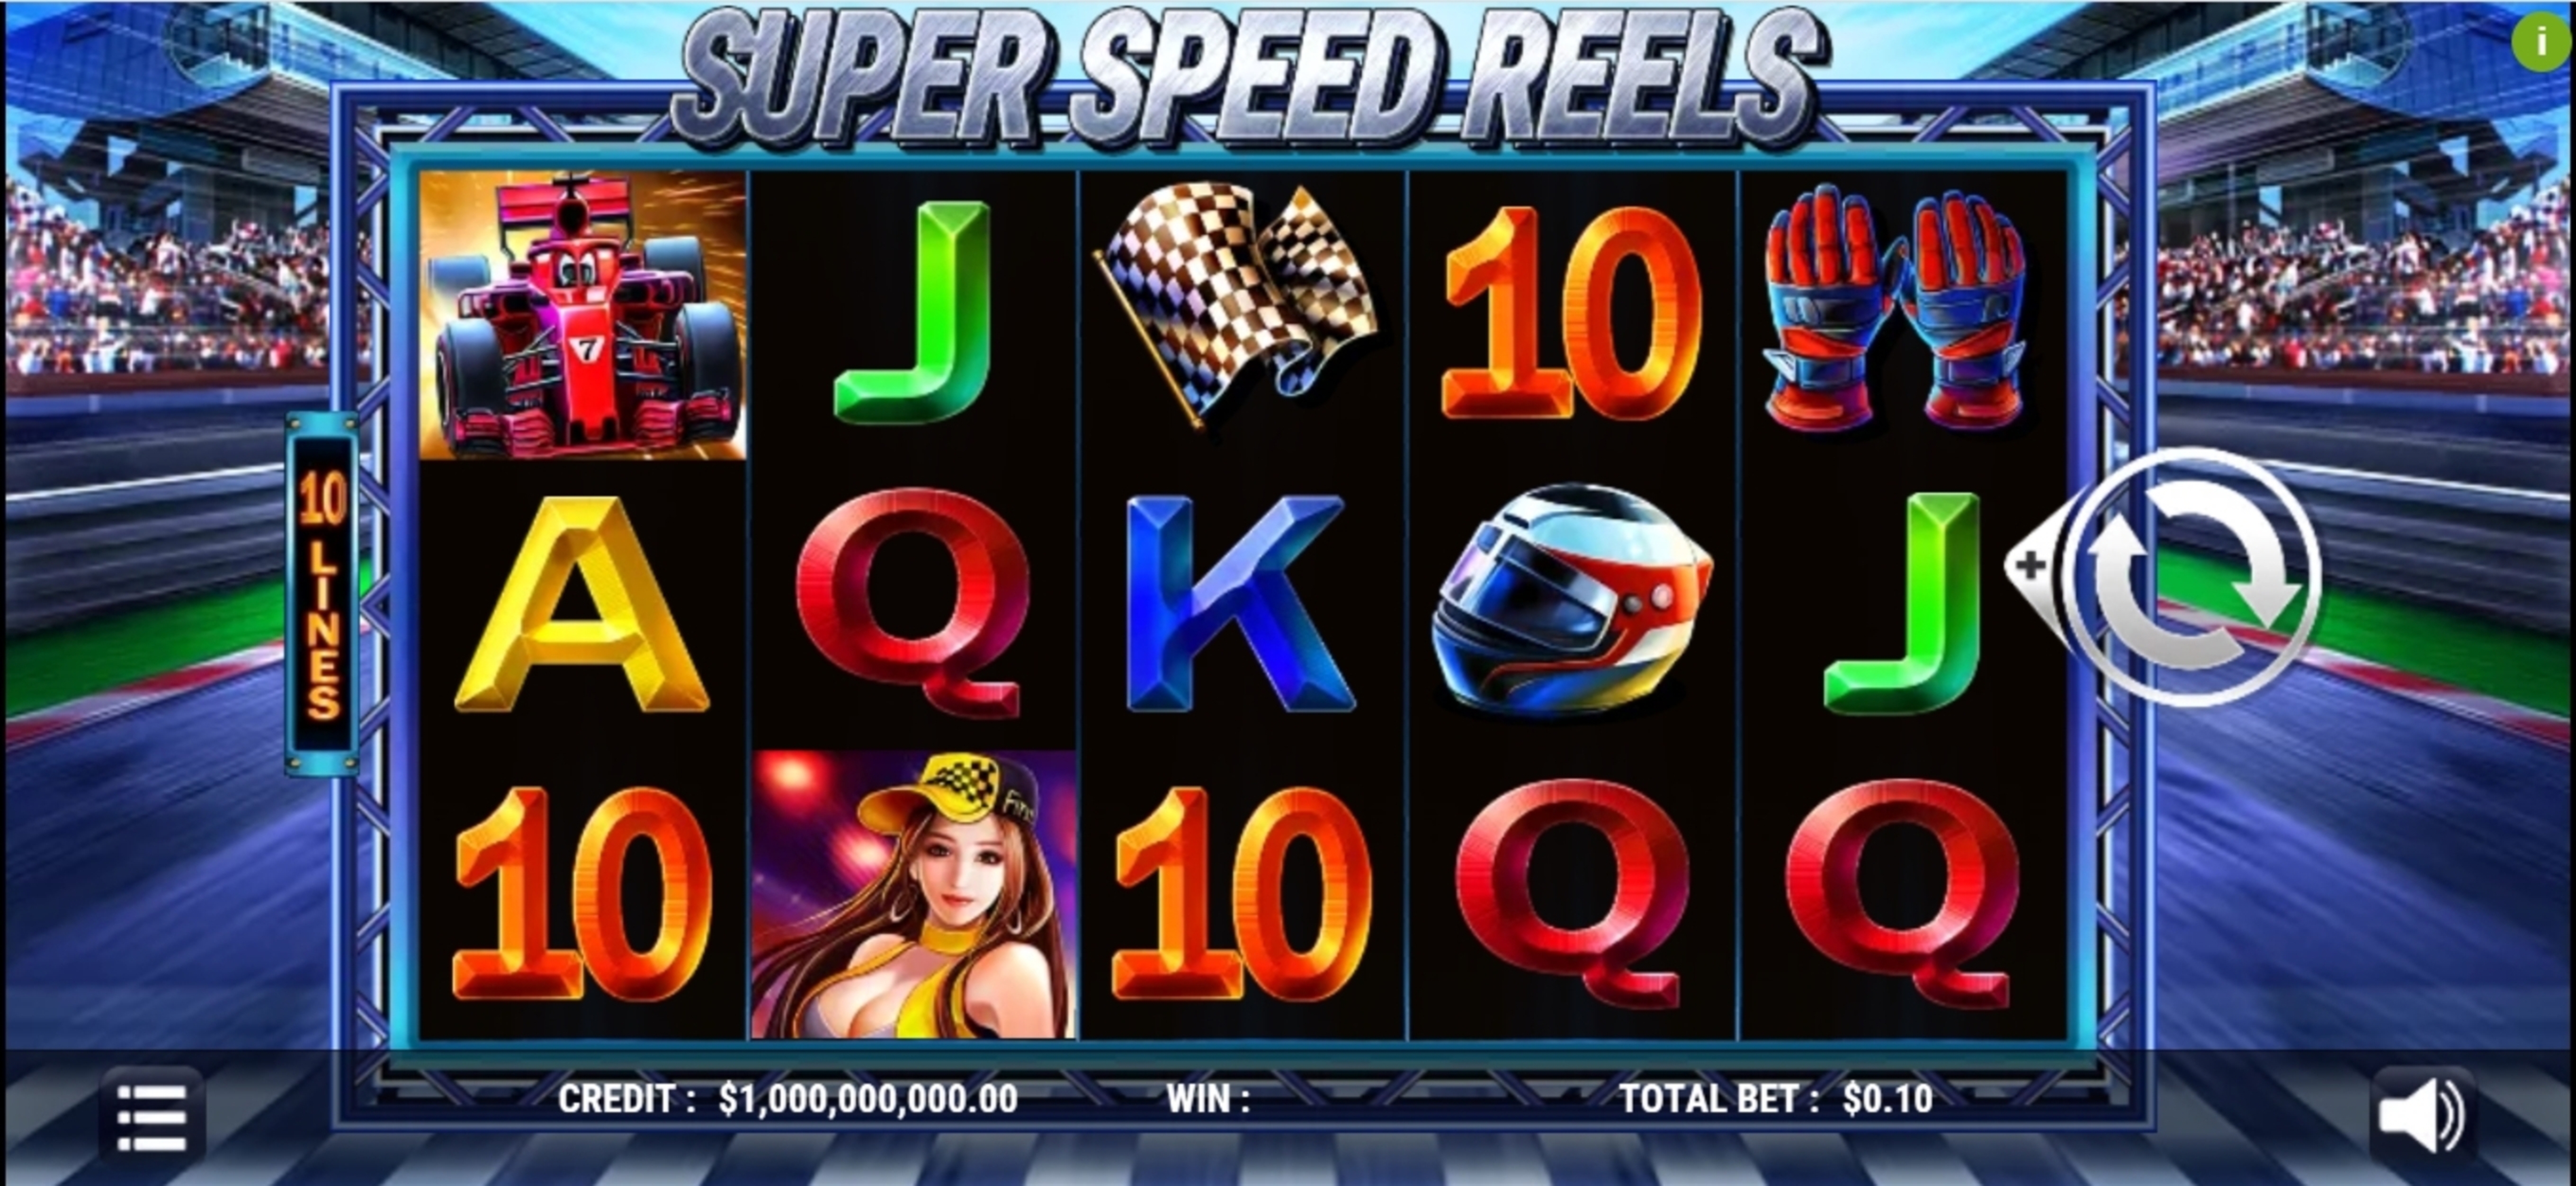 Reels in Super Speed Reels Slot Game by Slot Factory